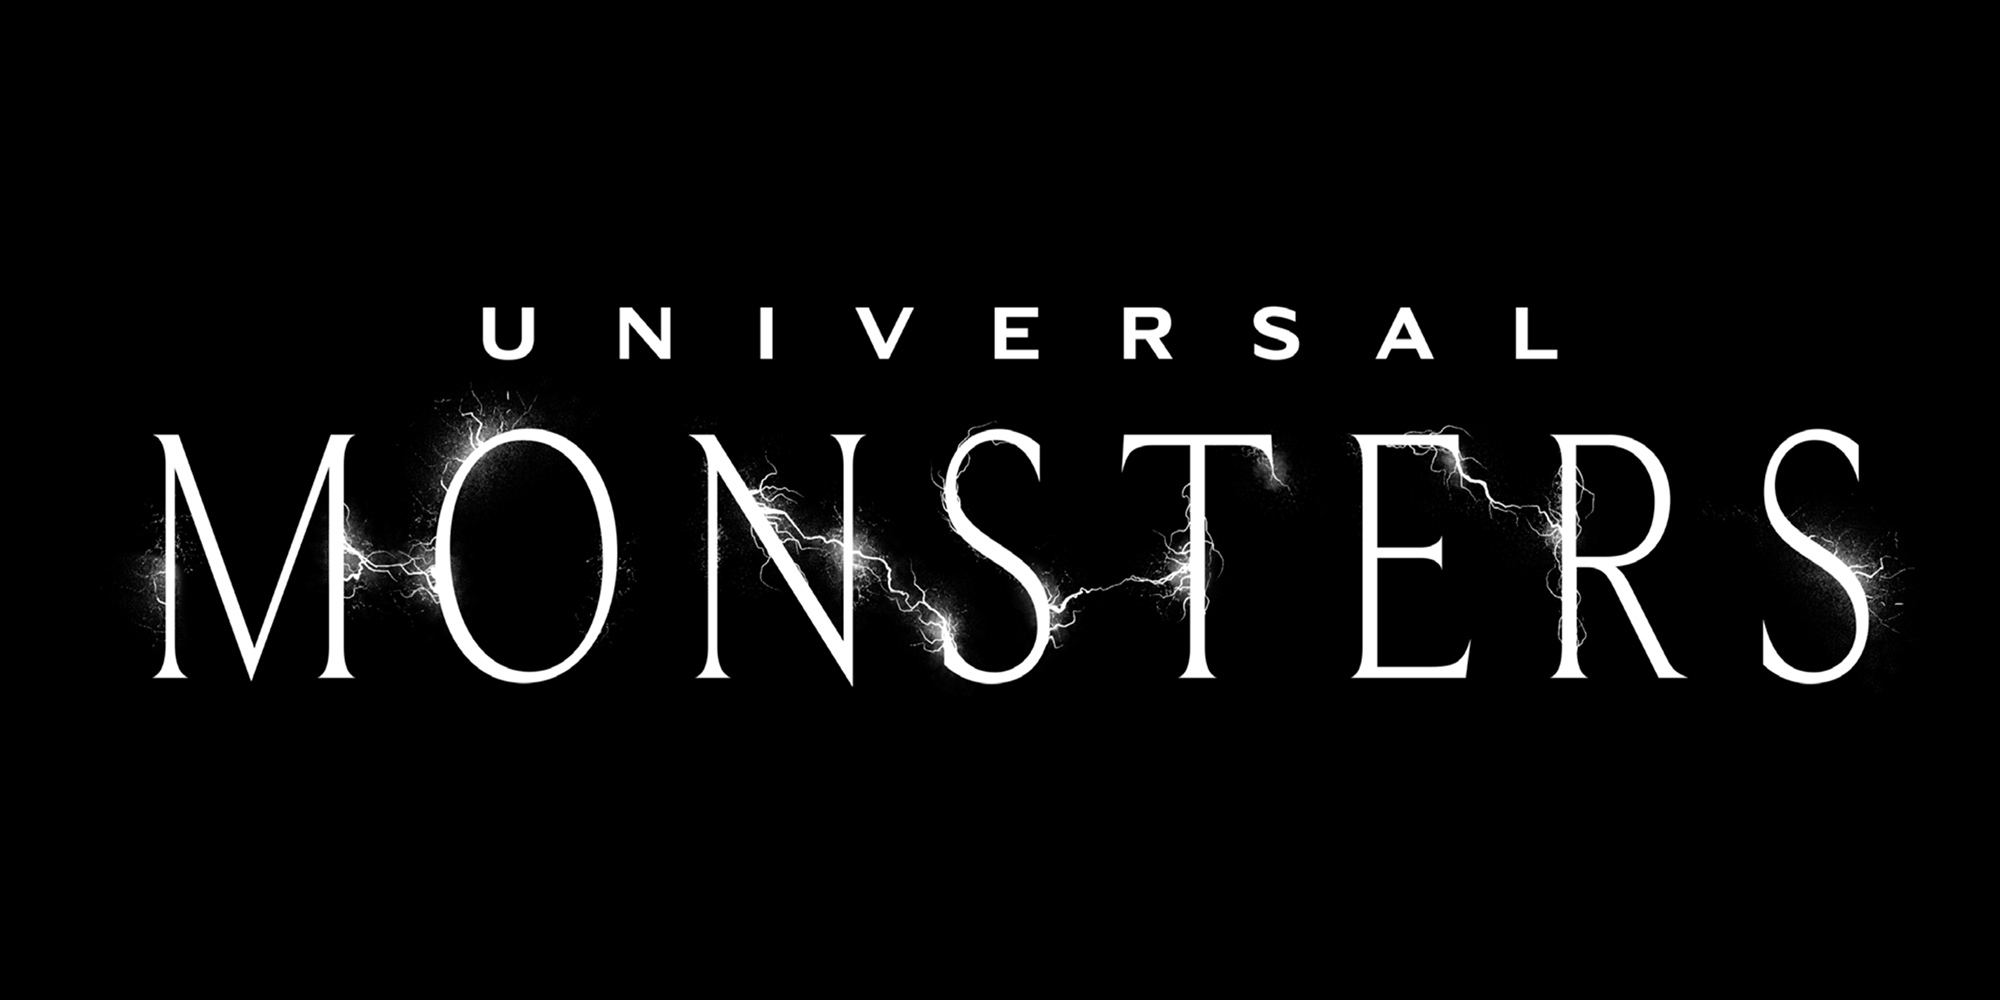 Universal monsters 04